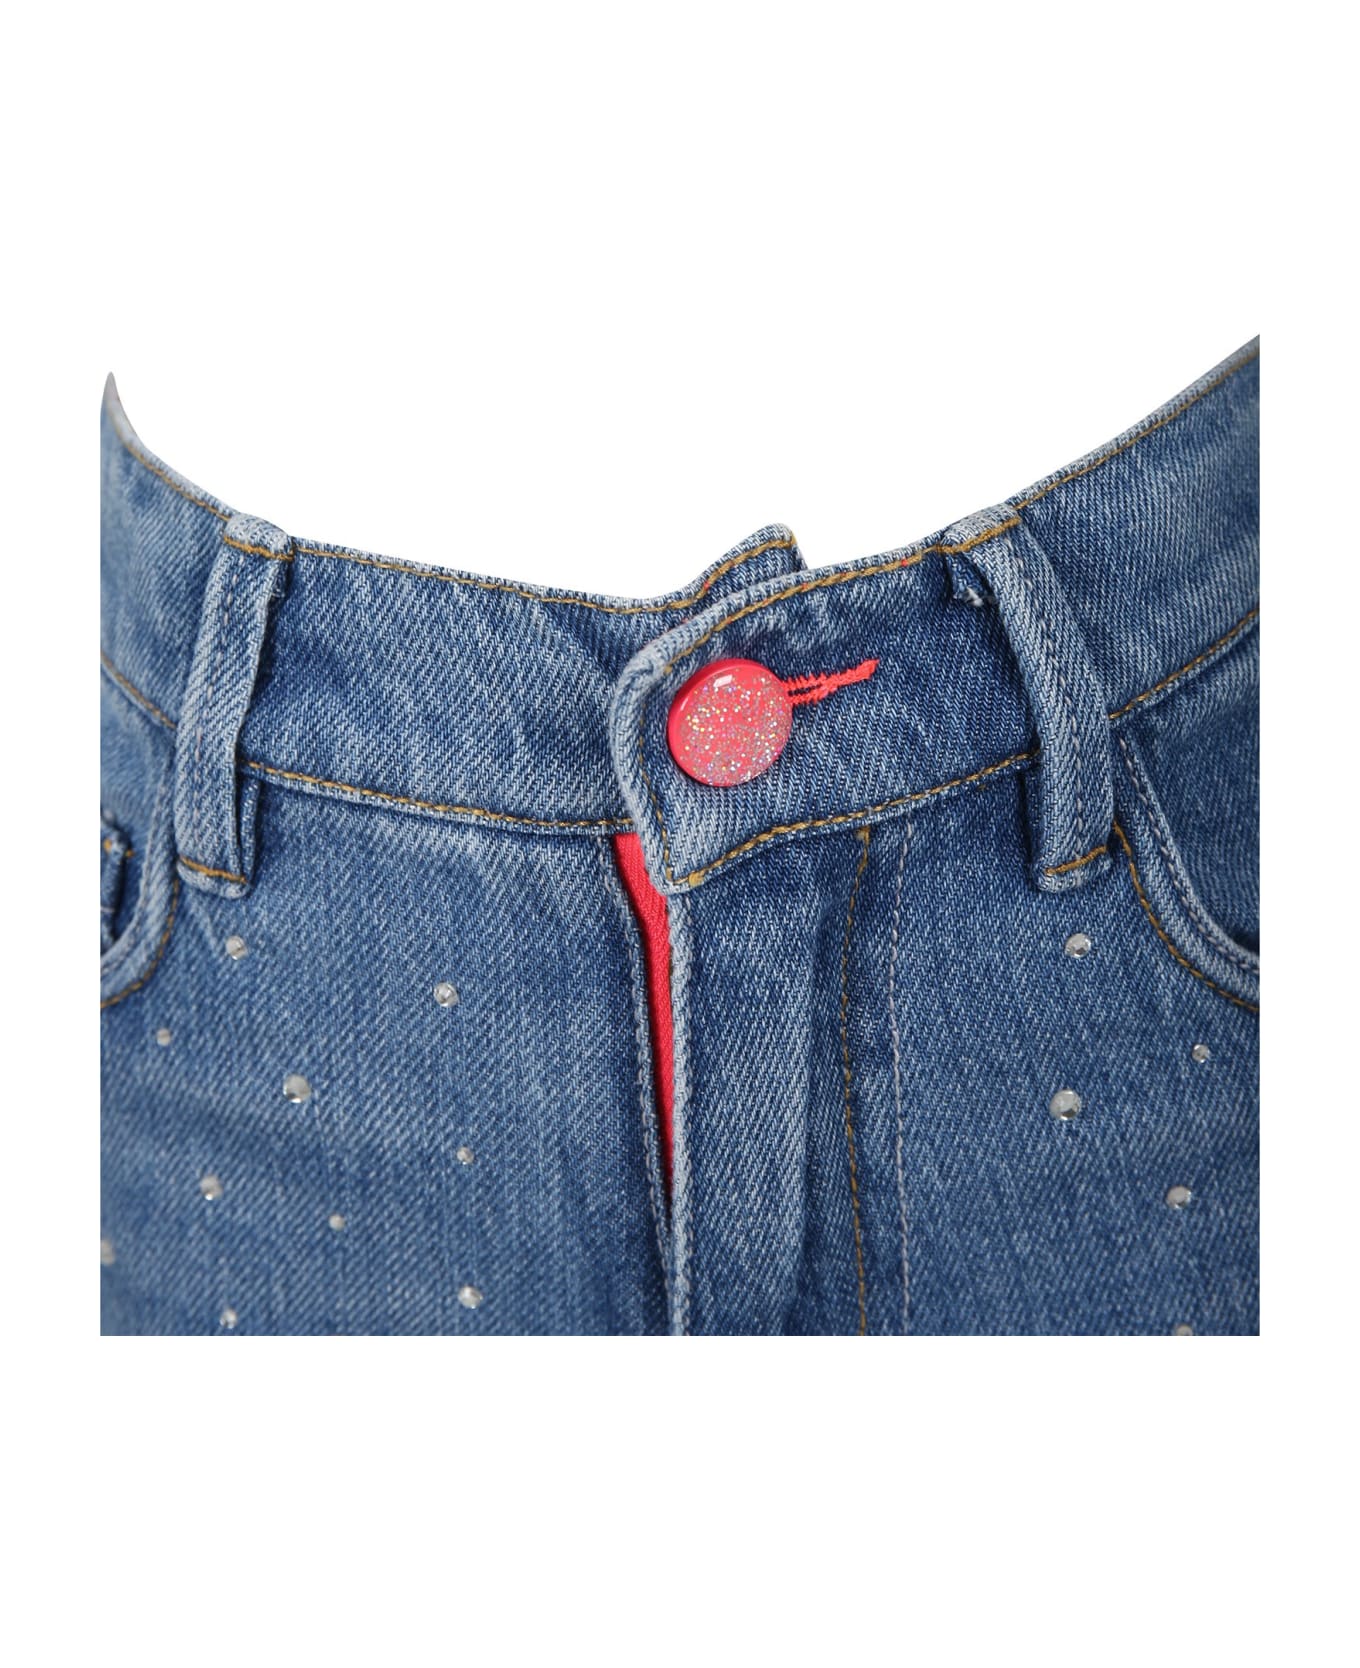 Billieblush Denim Jeans For Girls With Studs - Denim ボトムス